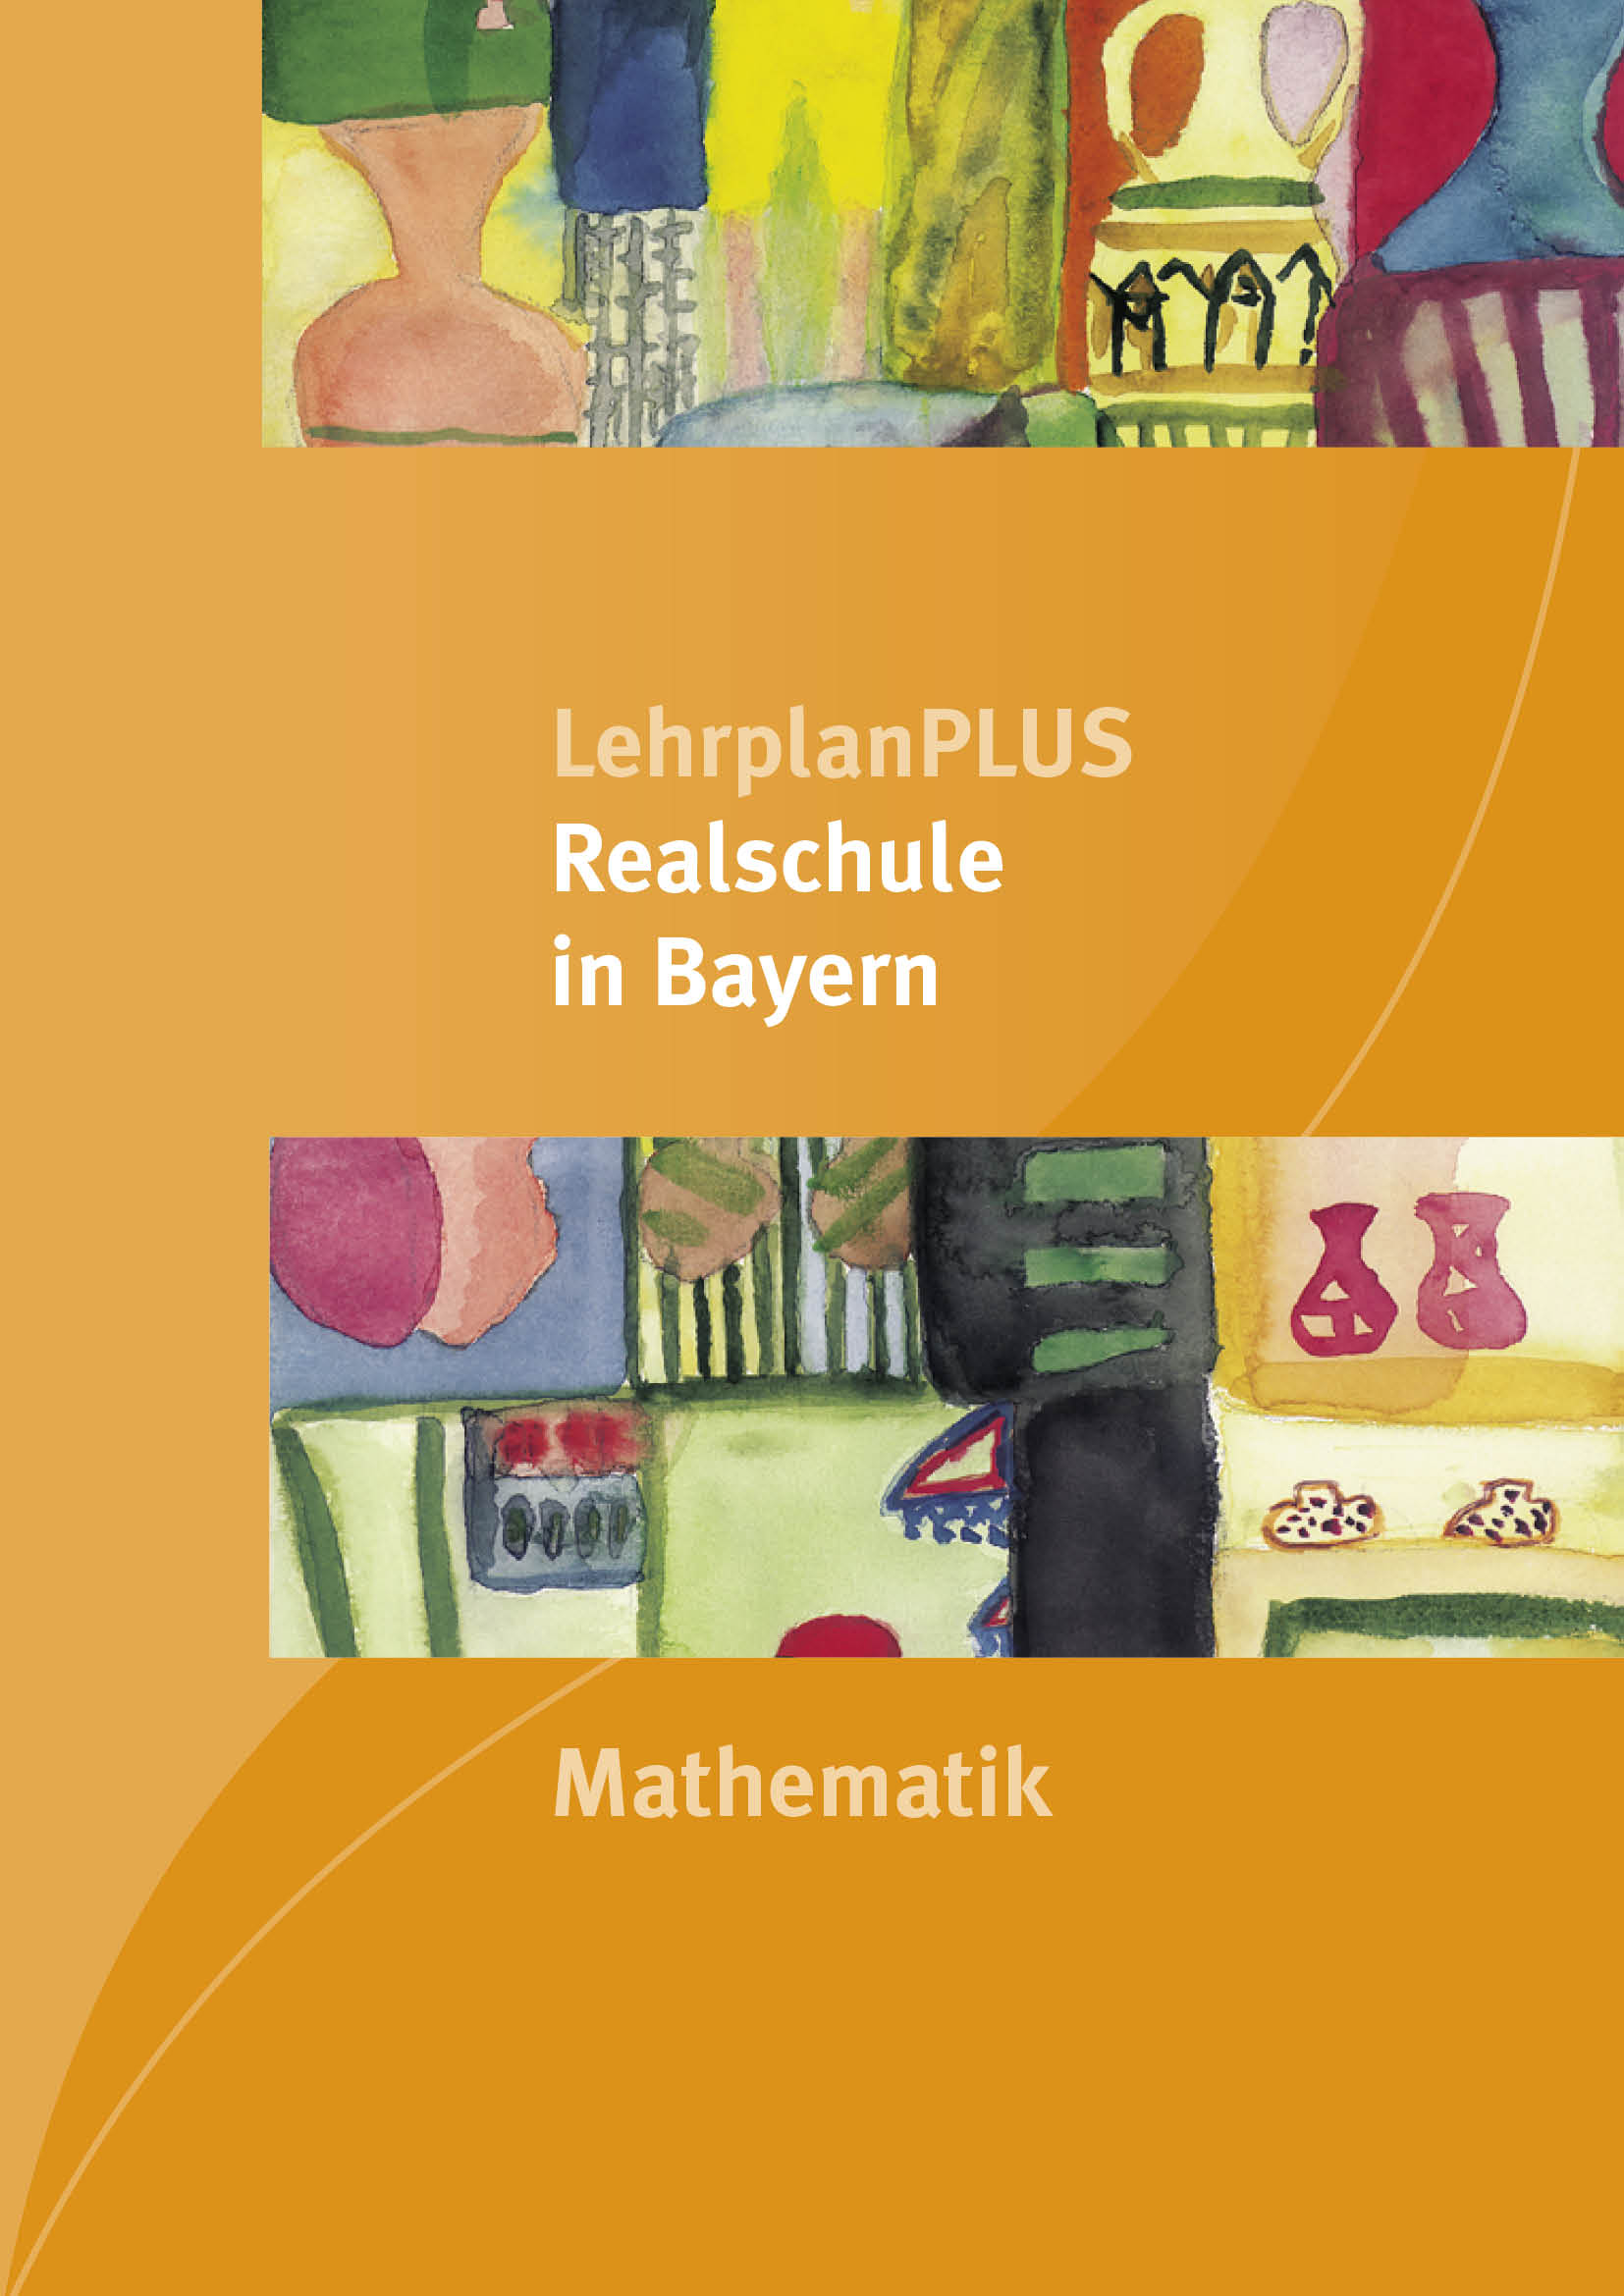 LehrplanPLUS Realschule in Bayern - Mathematik